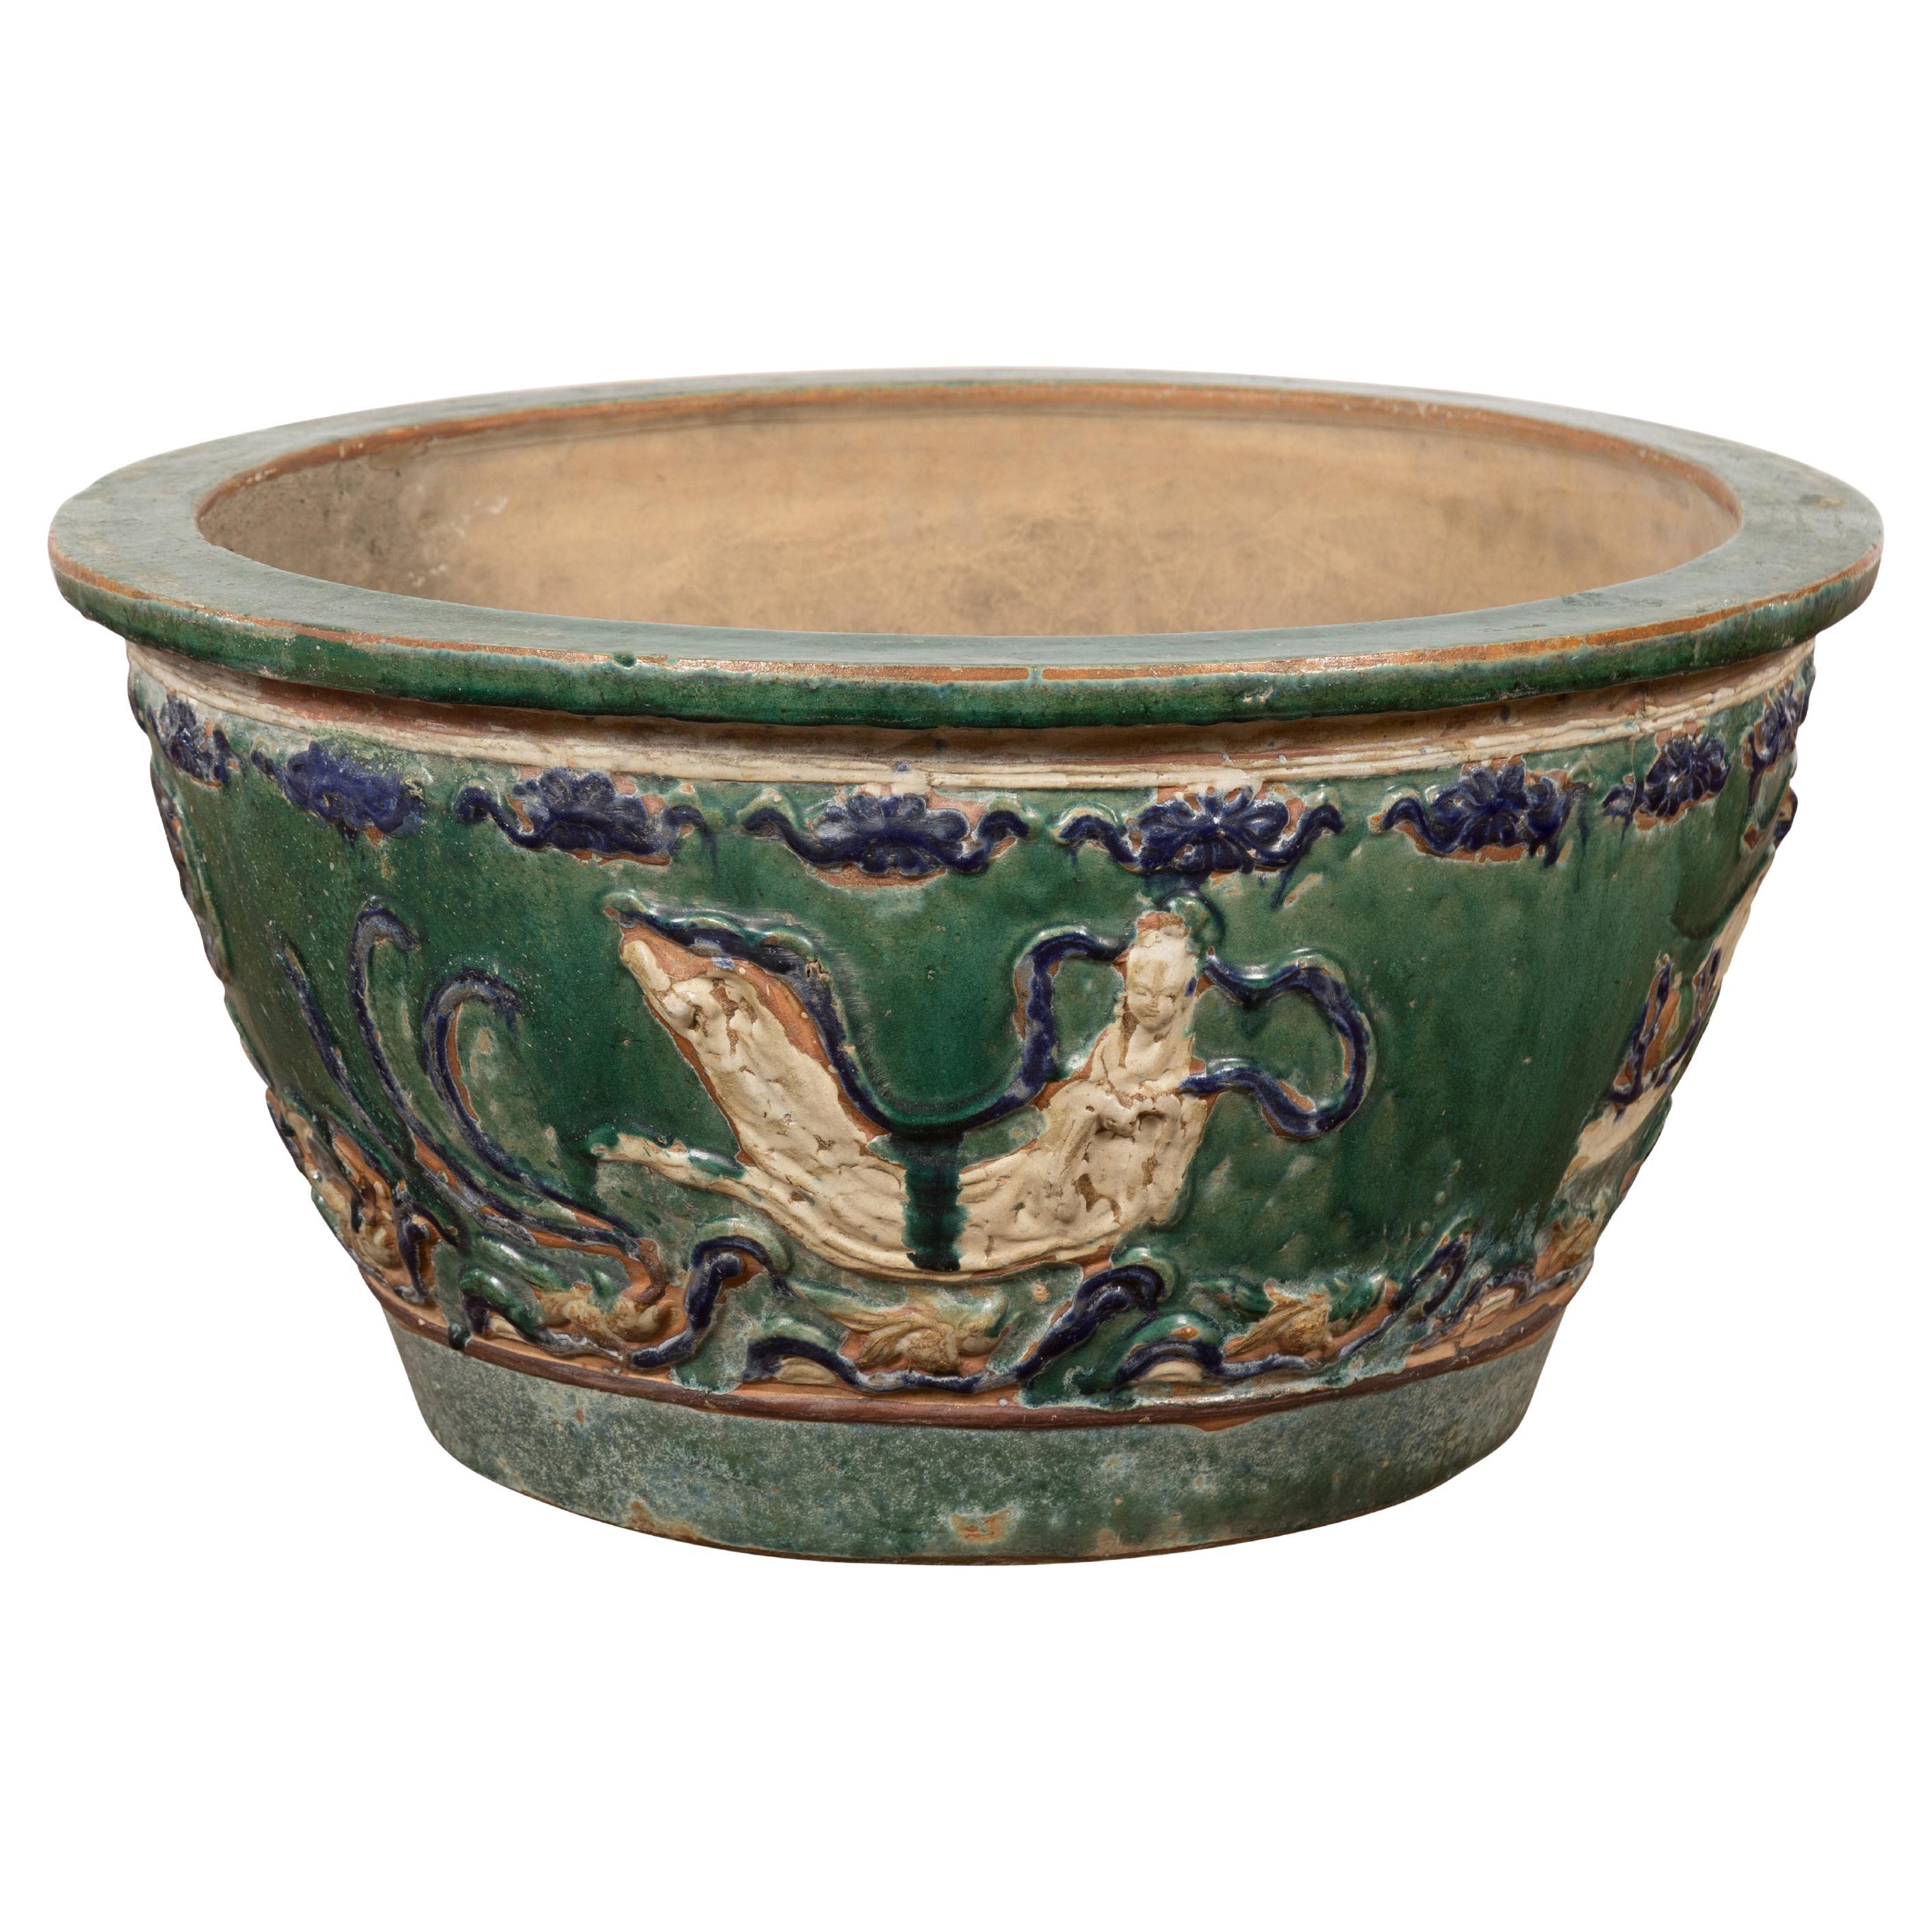 Large Green Antique Ceramic Planter with Blue Dragon Design